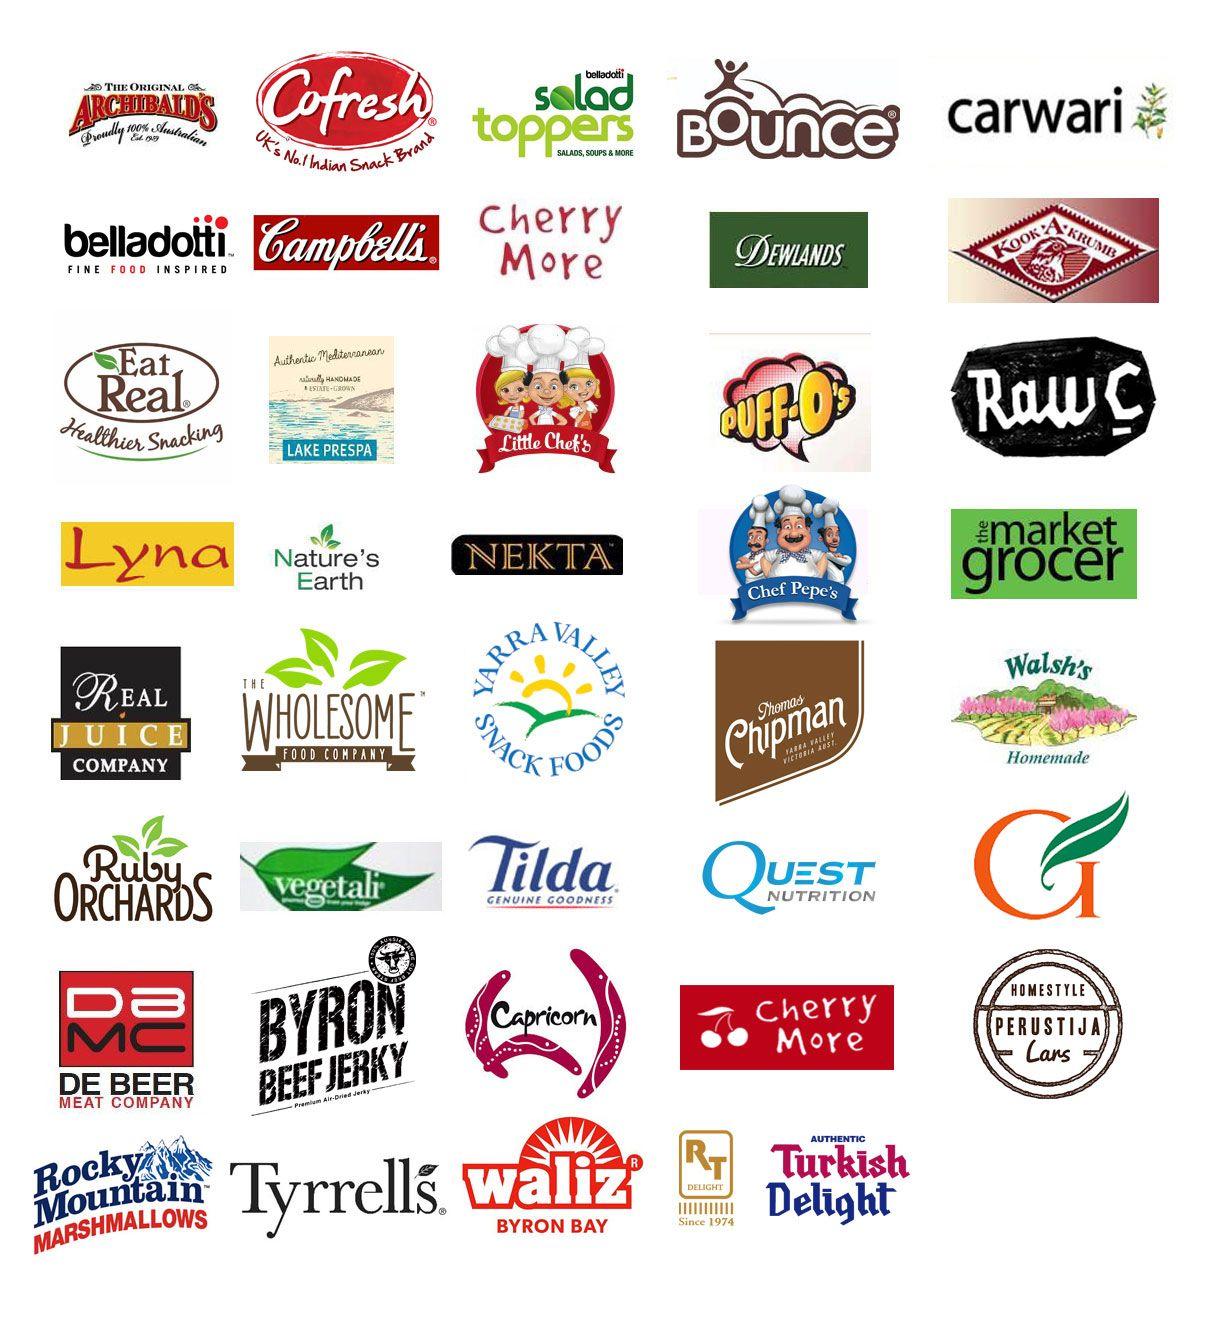 Signature Brands Logo - Signature Brands – Market Grocer